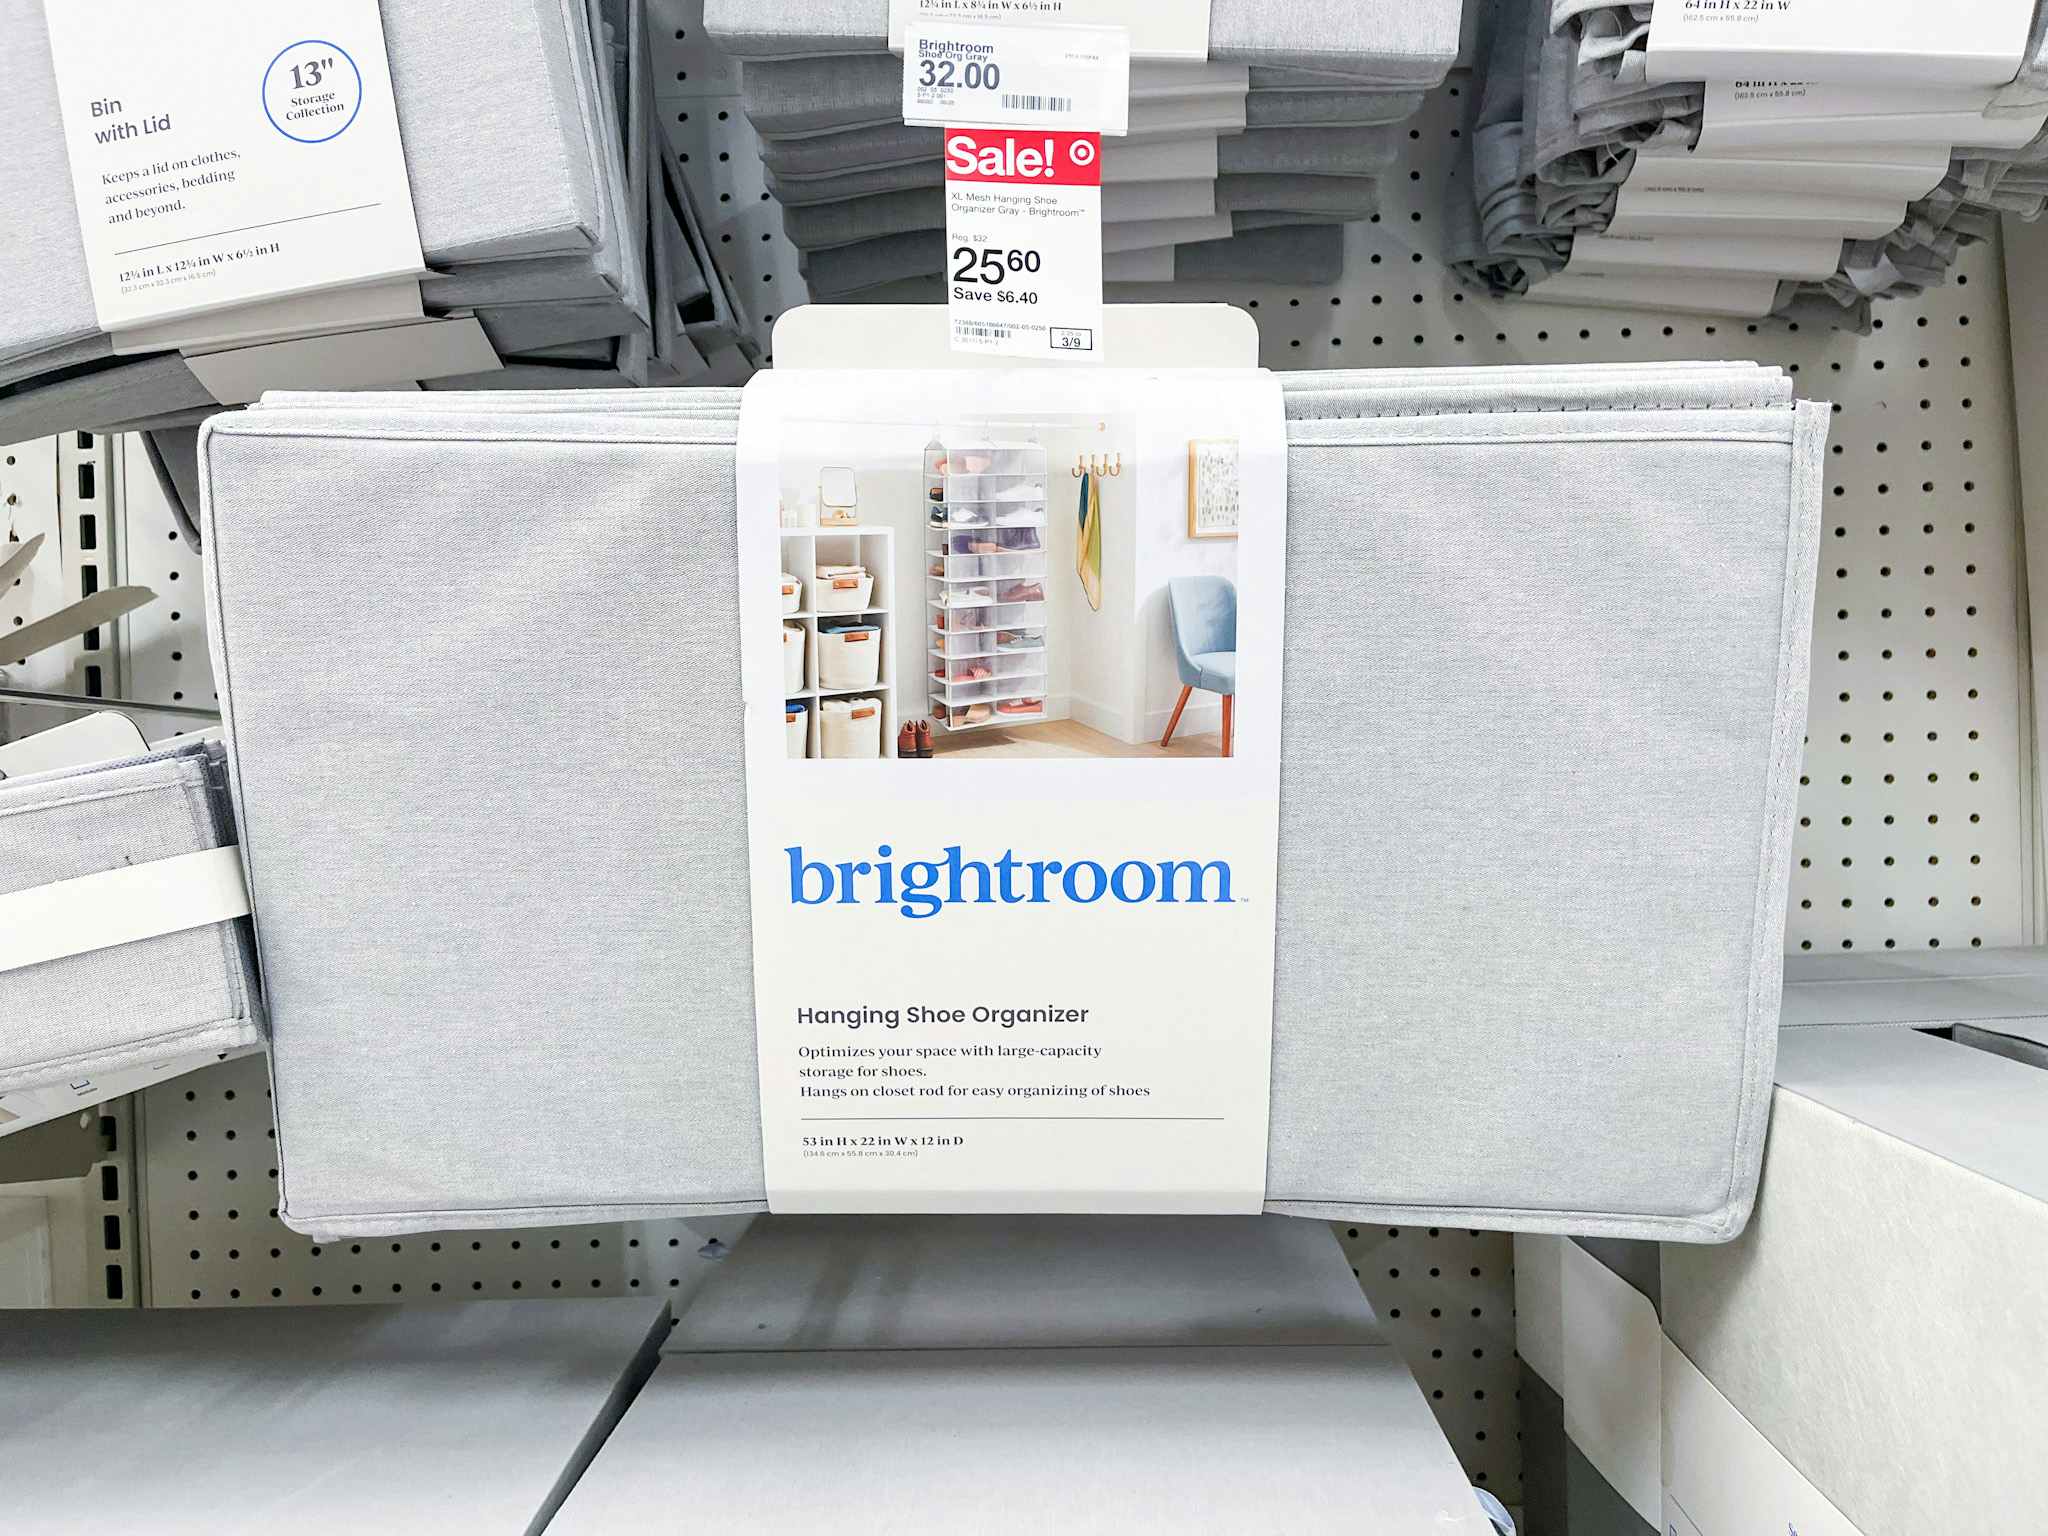 brightroom-shoe-organizer-target1